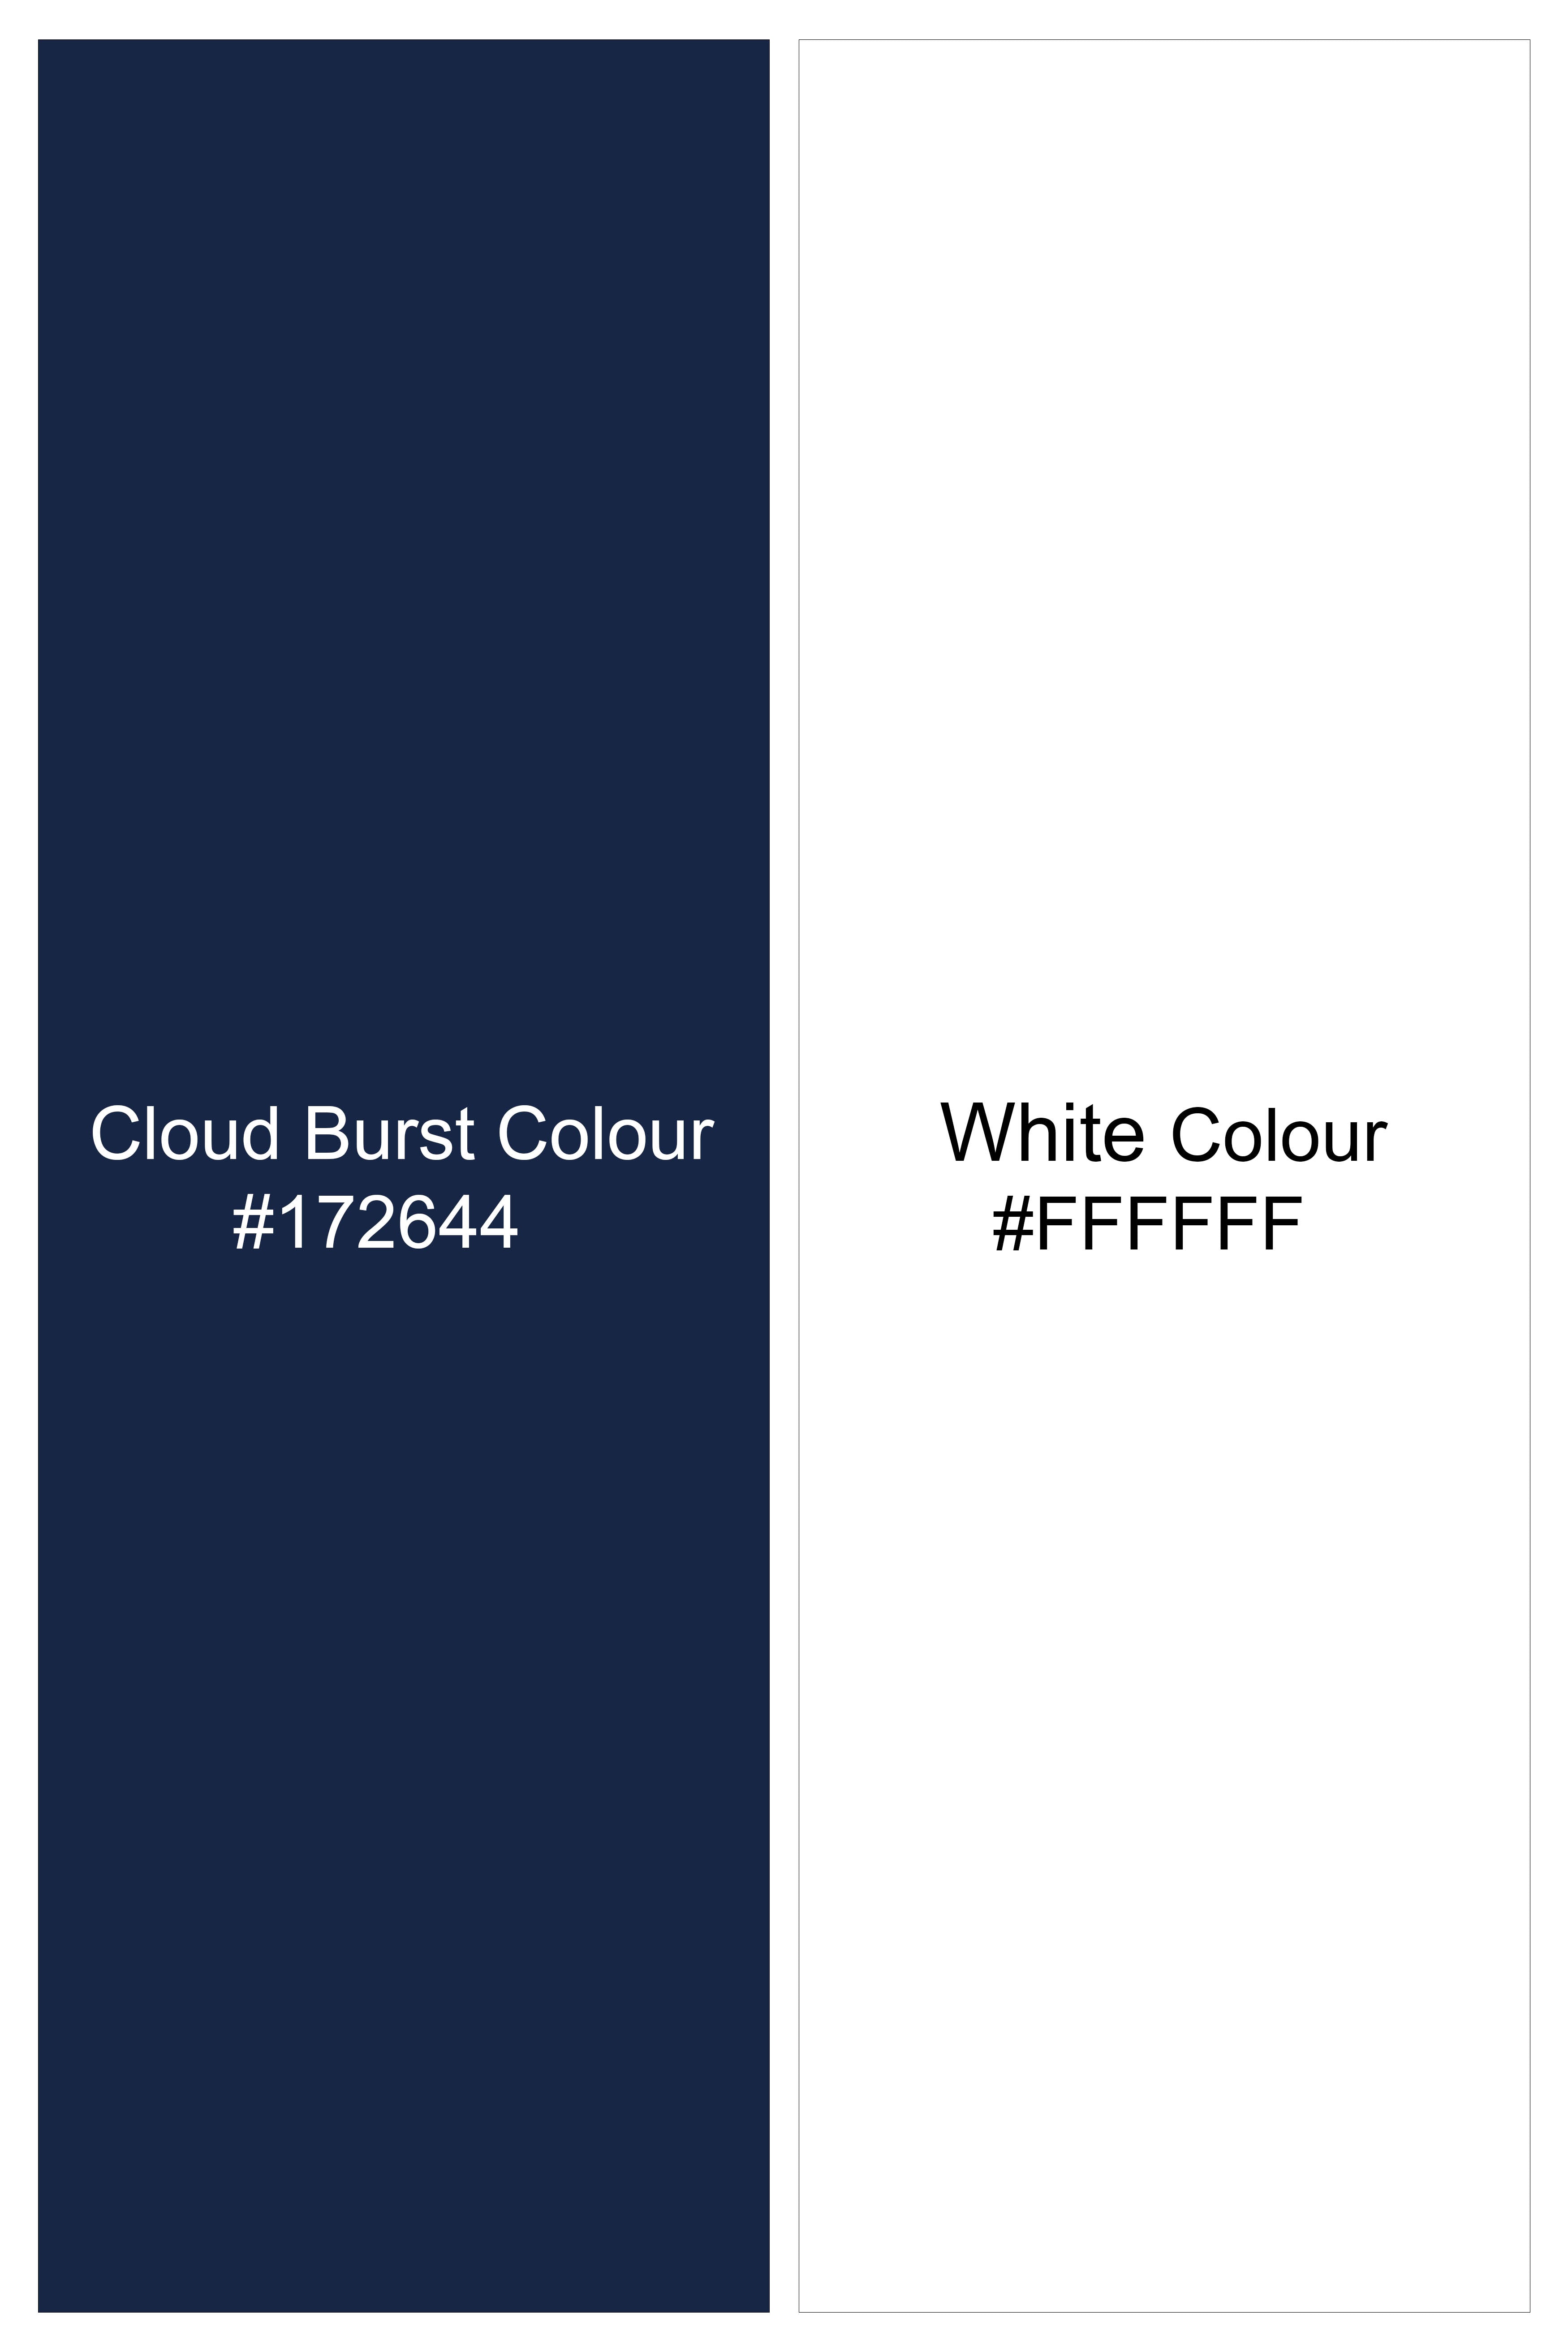 Cloud Burst Blue Striped with White Striped Hand Painted Premium Cotton Designer Shirt 6383-BLK-ART-38, 6383-BLK-ART-H-38, 6383-BLK-ART-39, 6383-BLK-ART-H-39, 6383-BLK-ART-40, 6383-BLK-ART-H-40, 6383-BLK-ART-42, 6383-BLK-ART-H-42, 6383-BLK-ART-44, 6383-BLK-ART-H-44, 6383-BLK-ART-46, 6383-BLK-ART-H-46, 6383-BLK-ART-48, 6383-BLK-ART-H-48, 6383-BLK-ART-50, 6383-BLK-ART-H-50, 6383-BLK-ART-52, 6383-BLK-ART-H-52